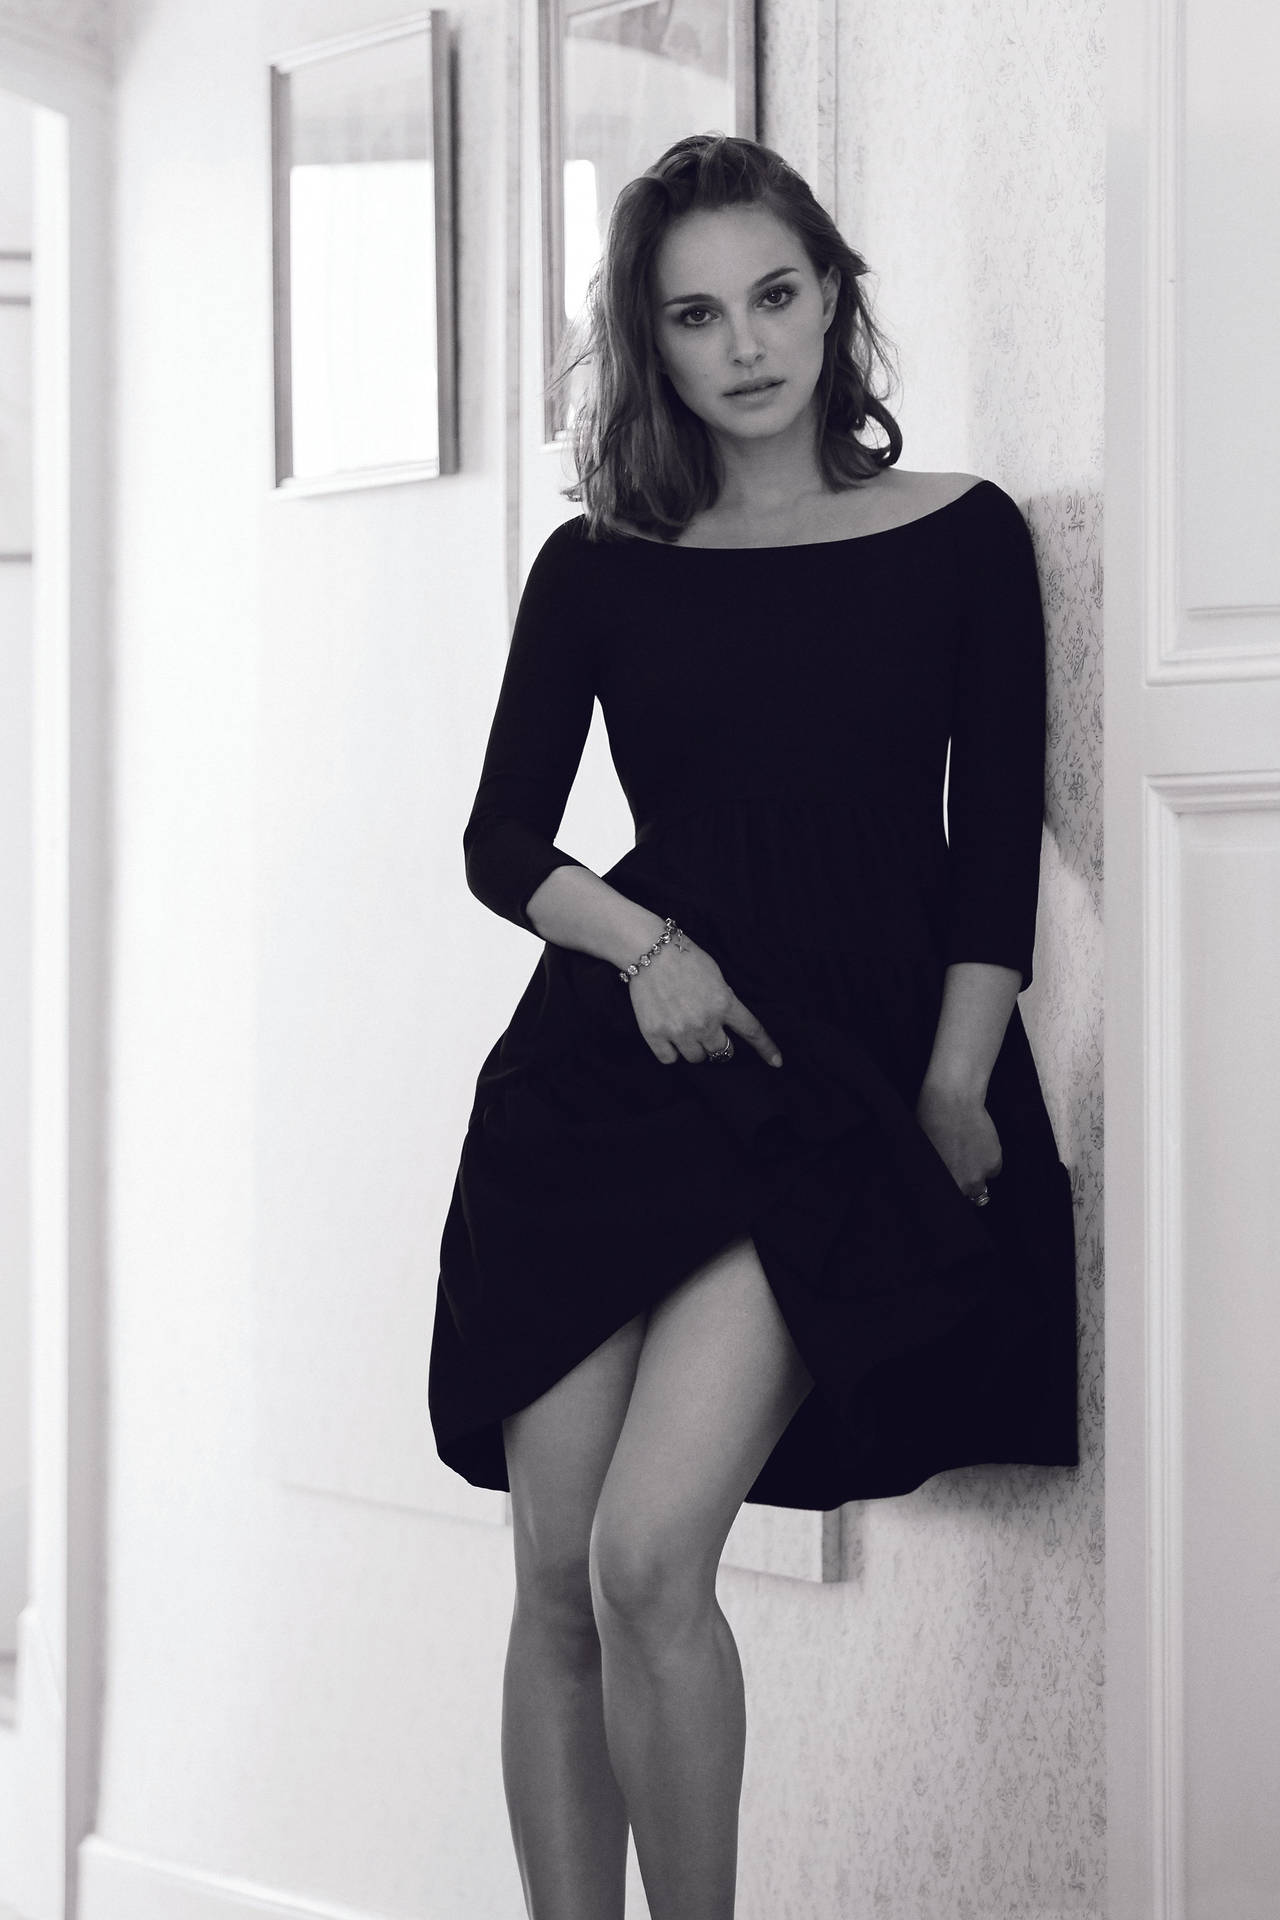 Top 999+ Natalie Portman Wallpaper Full HD, 4K✅Free to Use